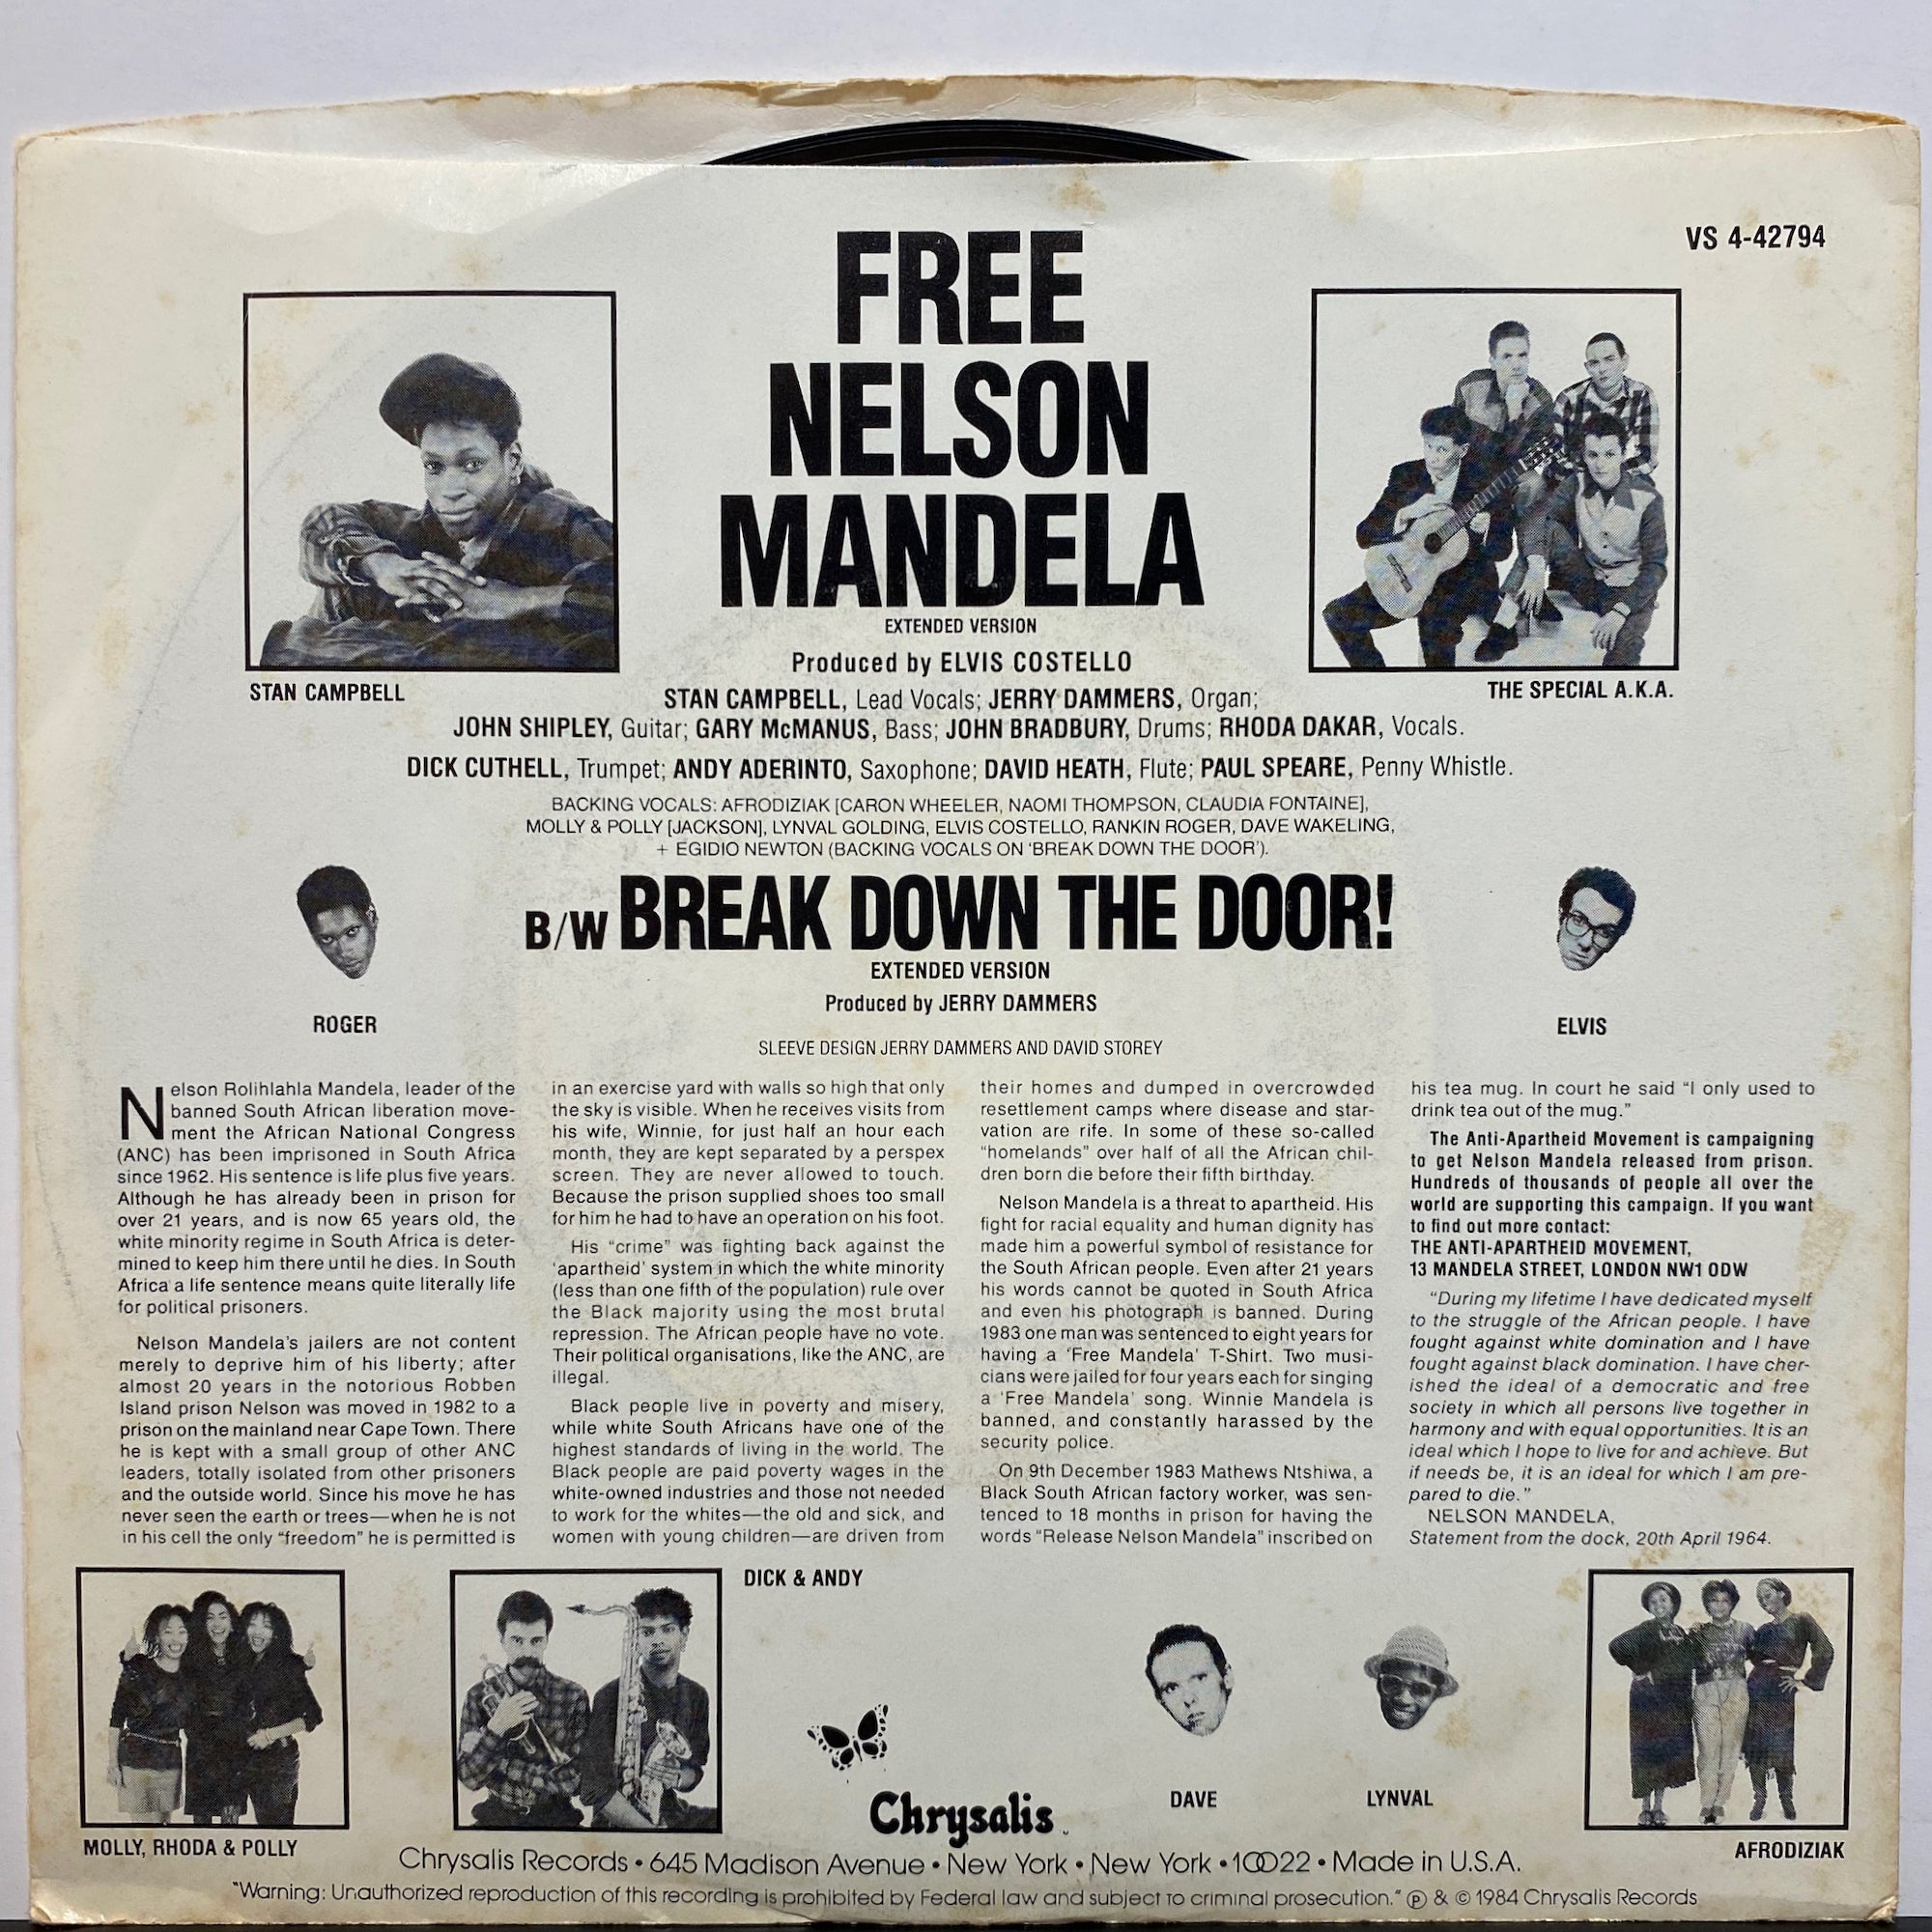 Special AKA, The / Free Nelson Mandela | VINYL7 RECORDS